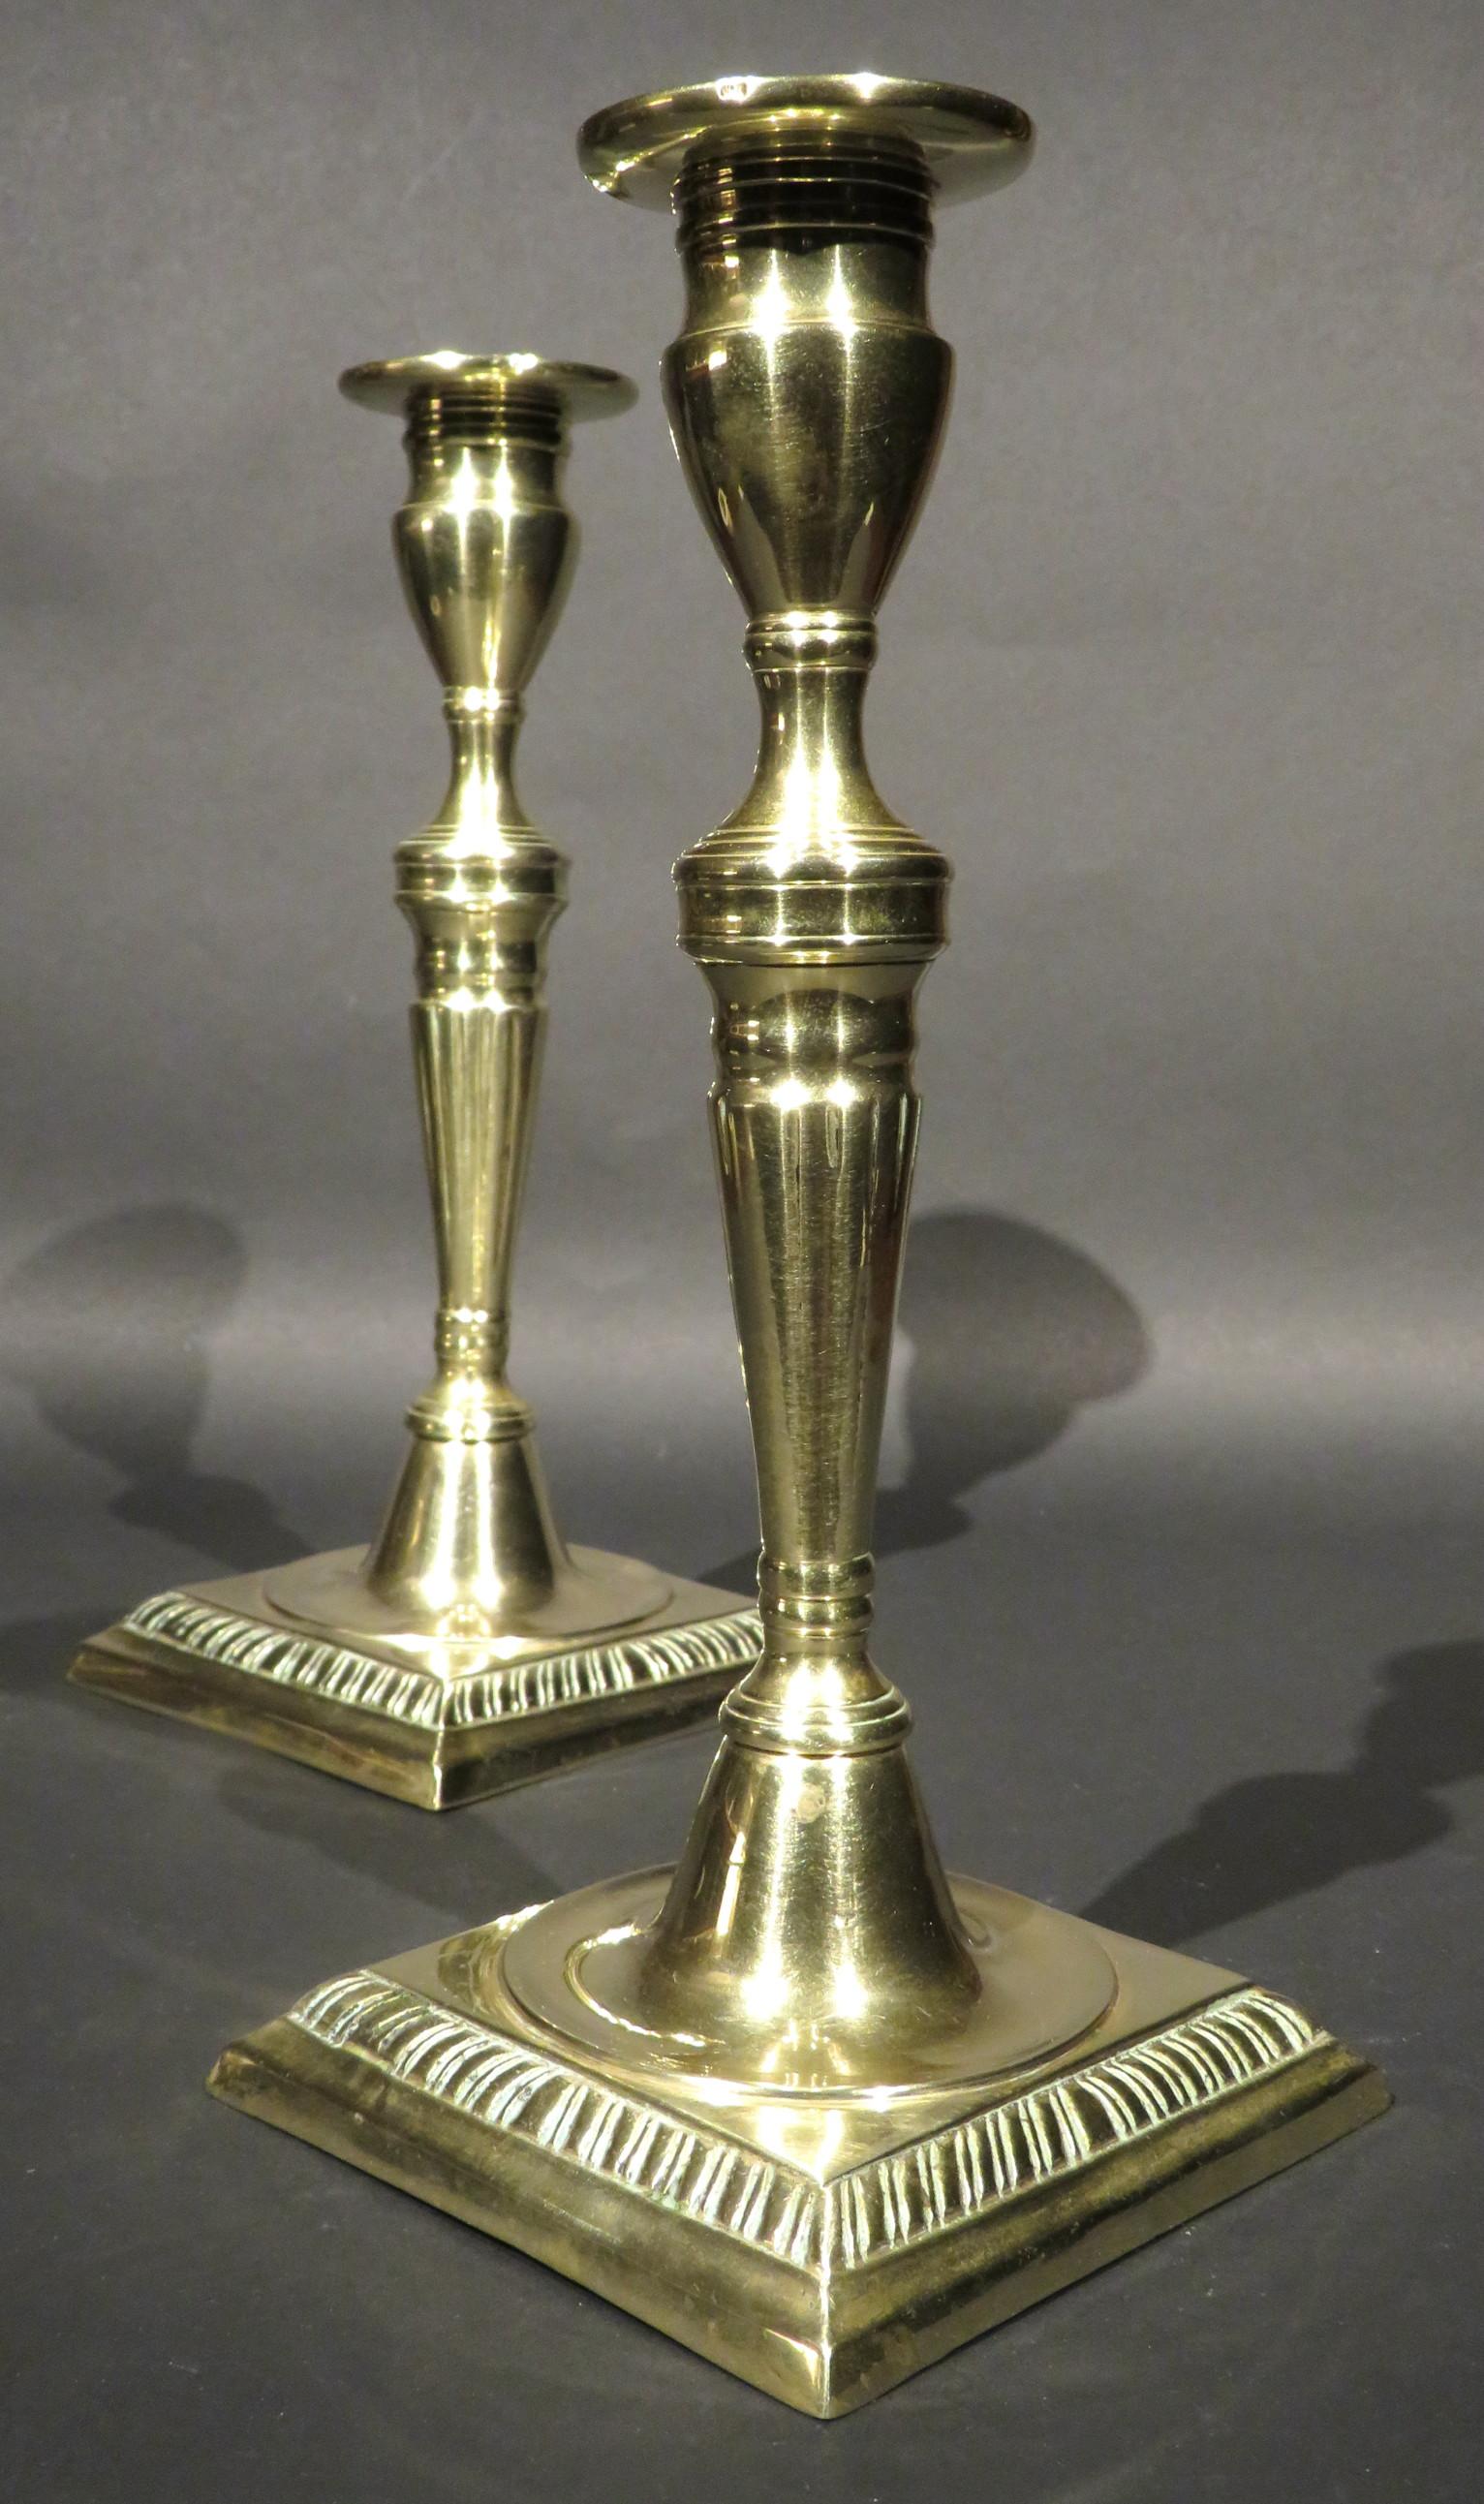 18th century candlesticks